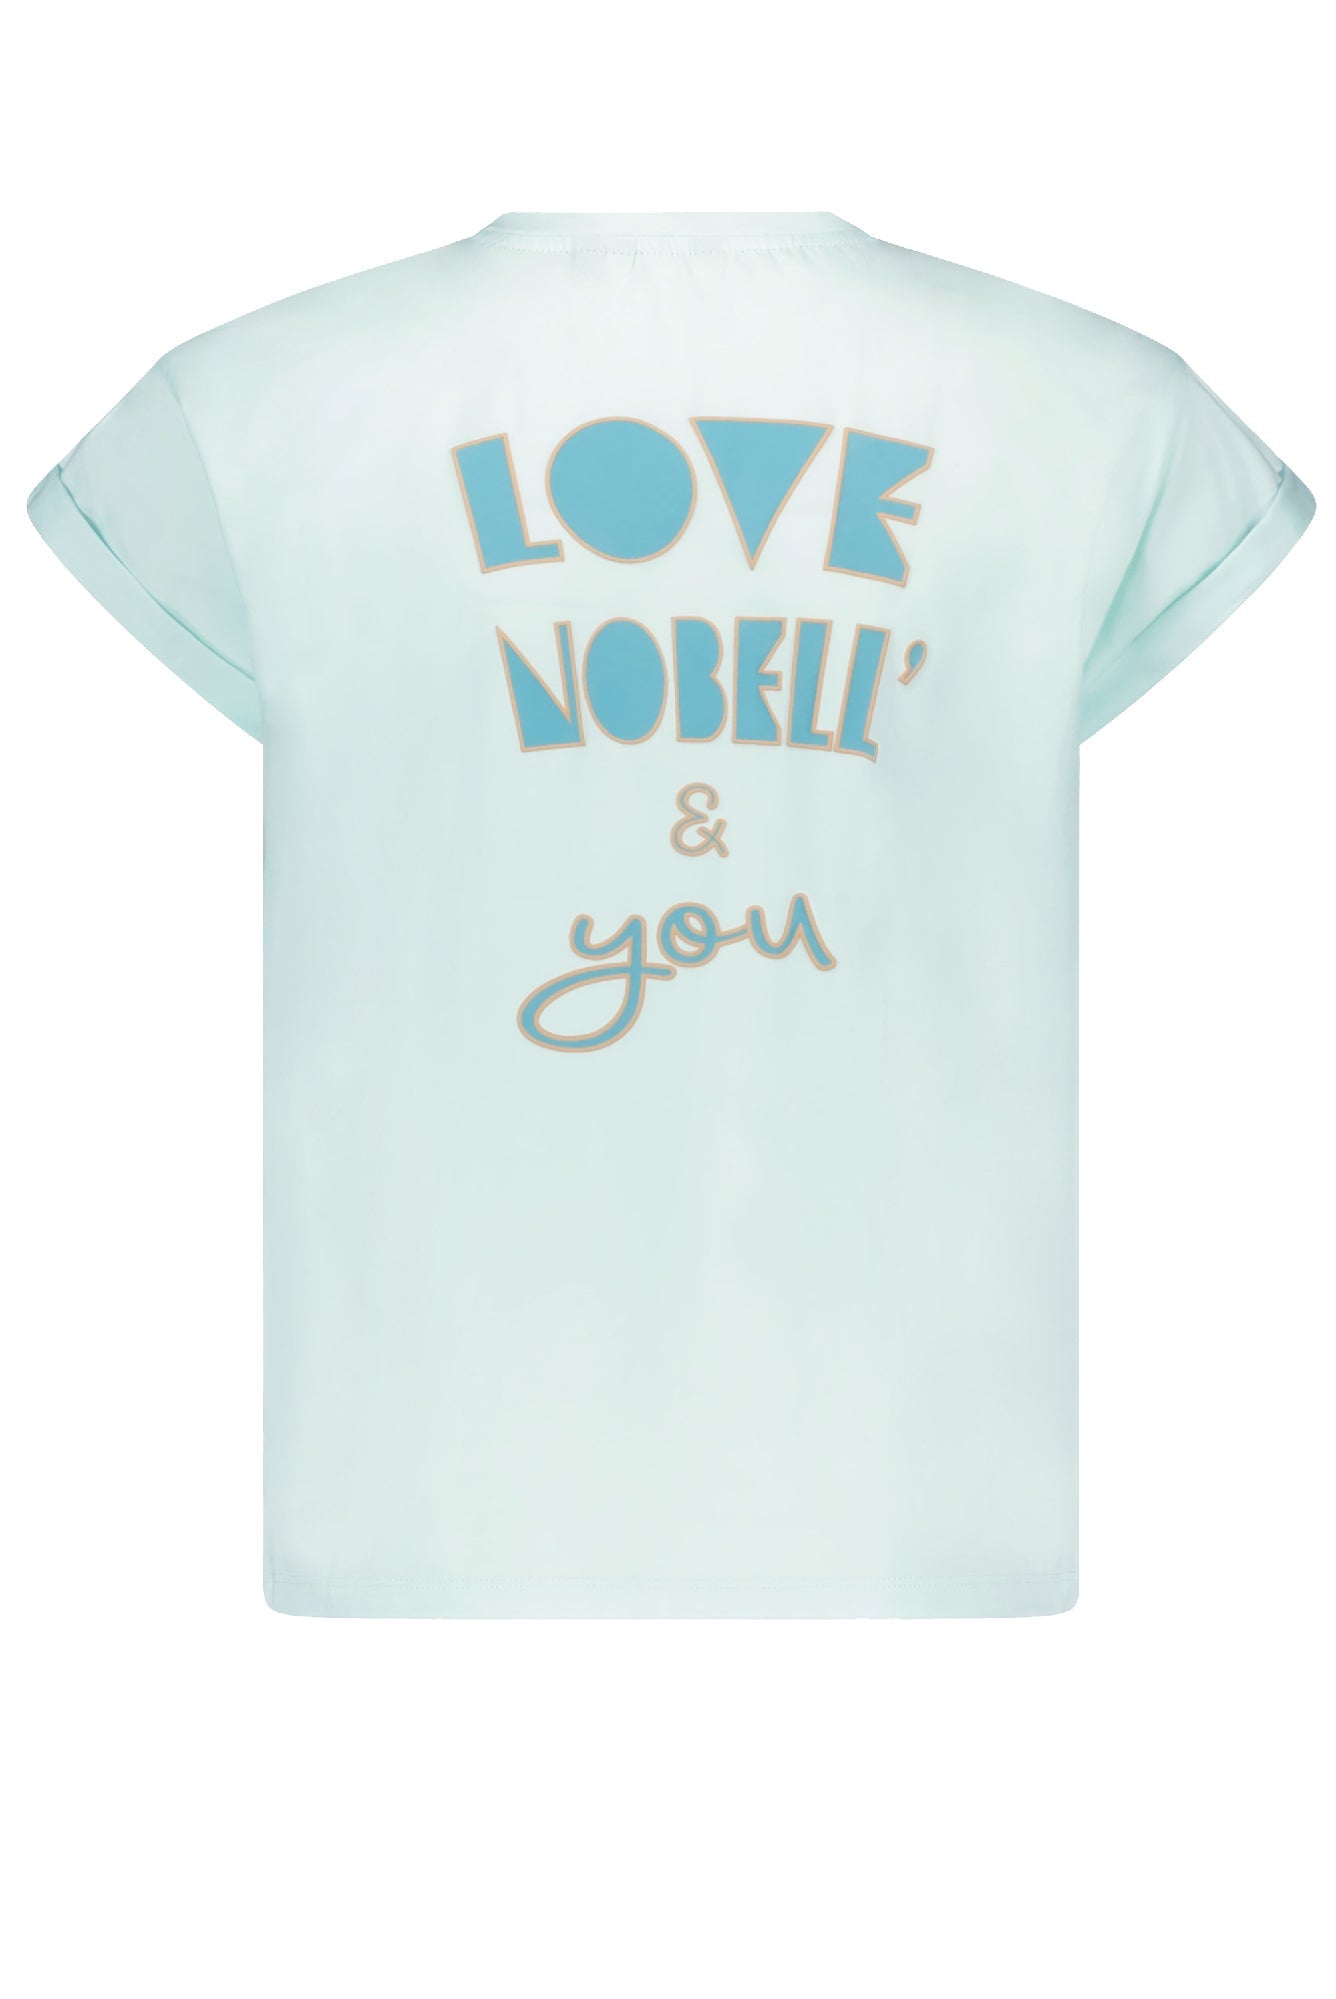 Meisjes Kasis crew neck tshirt s/sl with print LOVE PEACE & YOU van NoBell in de kleur Spa Blue in maat 170-176.